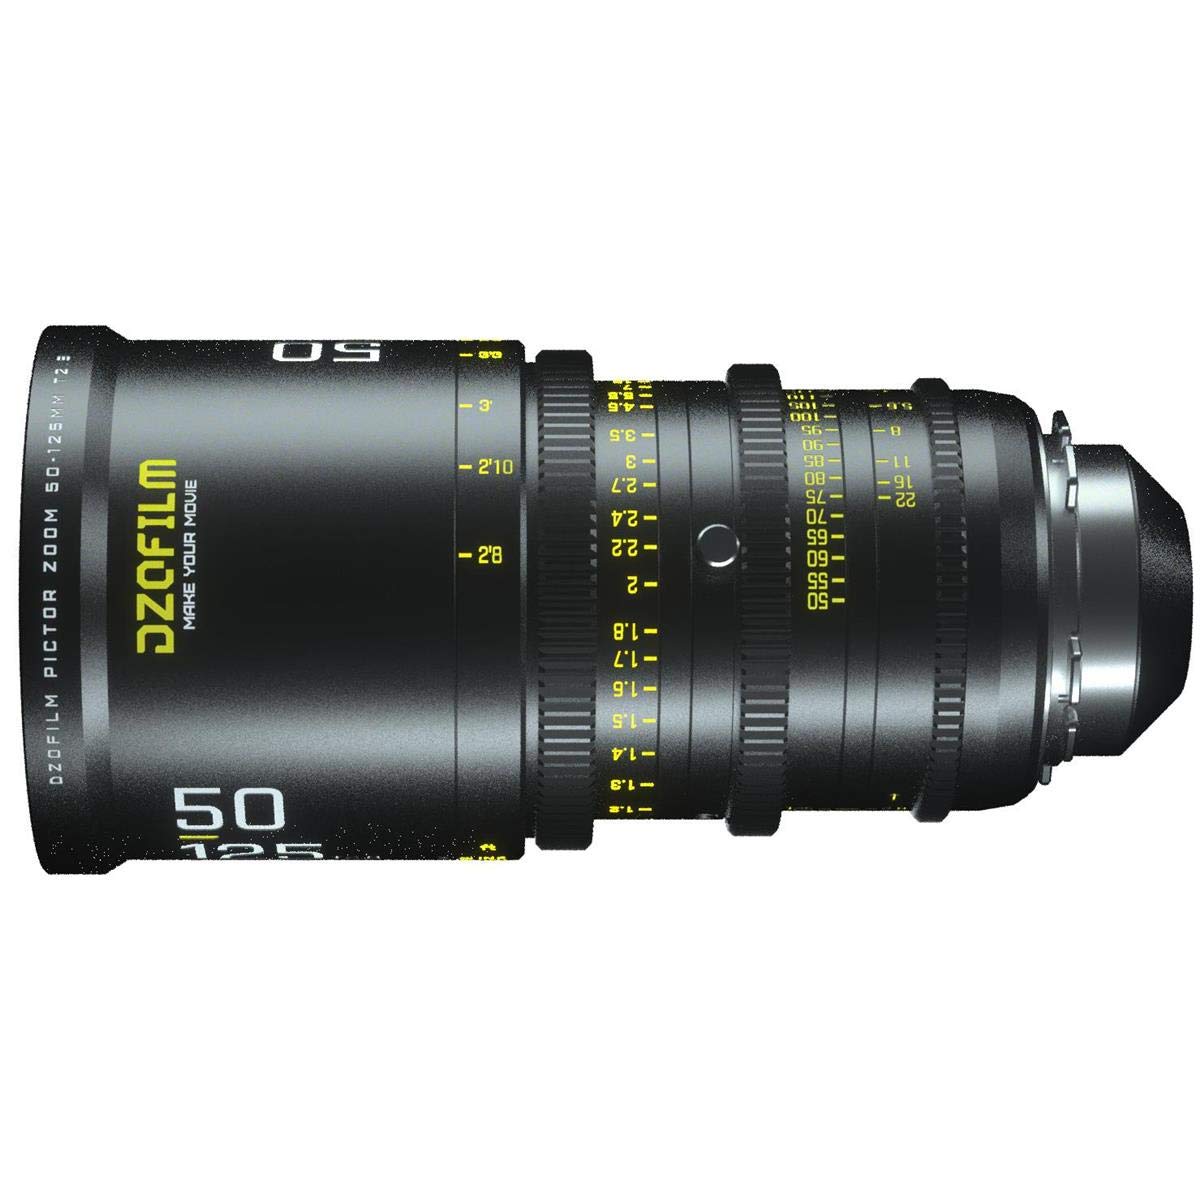 DZOFILM Pictor 50-125mm T2.8 Super35 Parfocal Cine Lens for PL Mount and Canon EF, Black